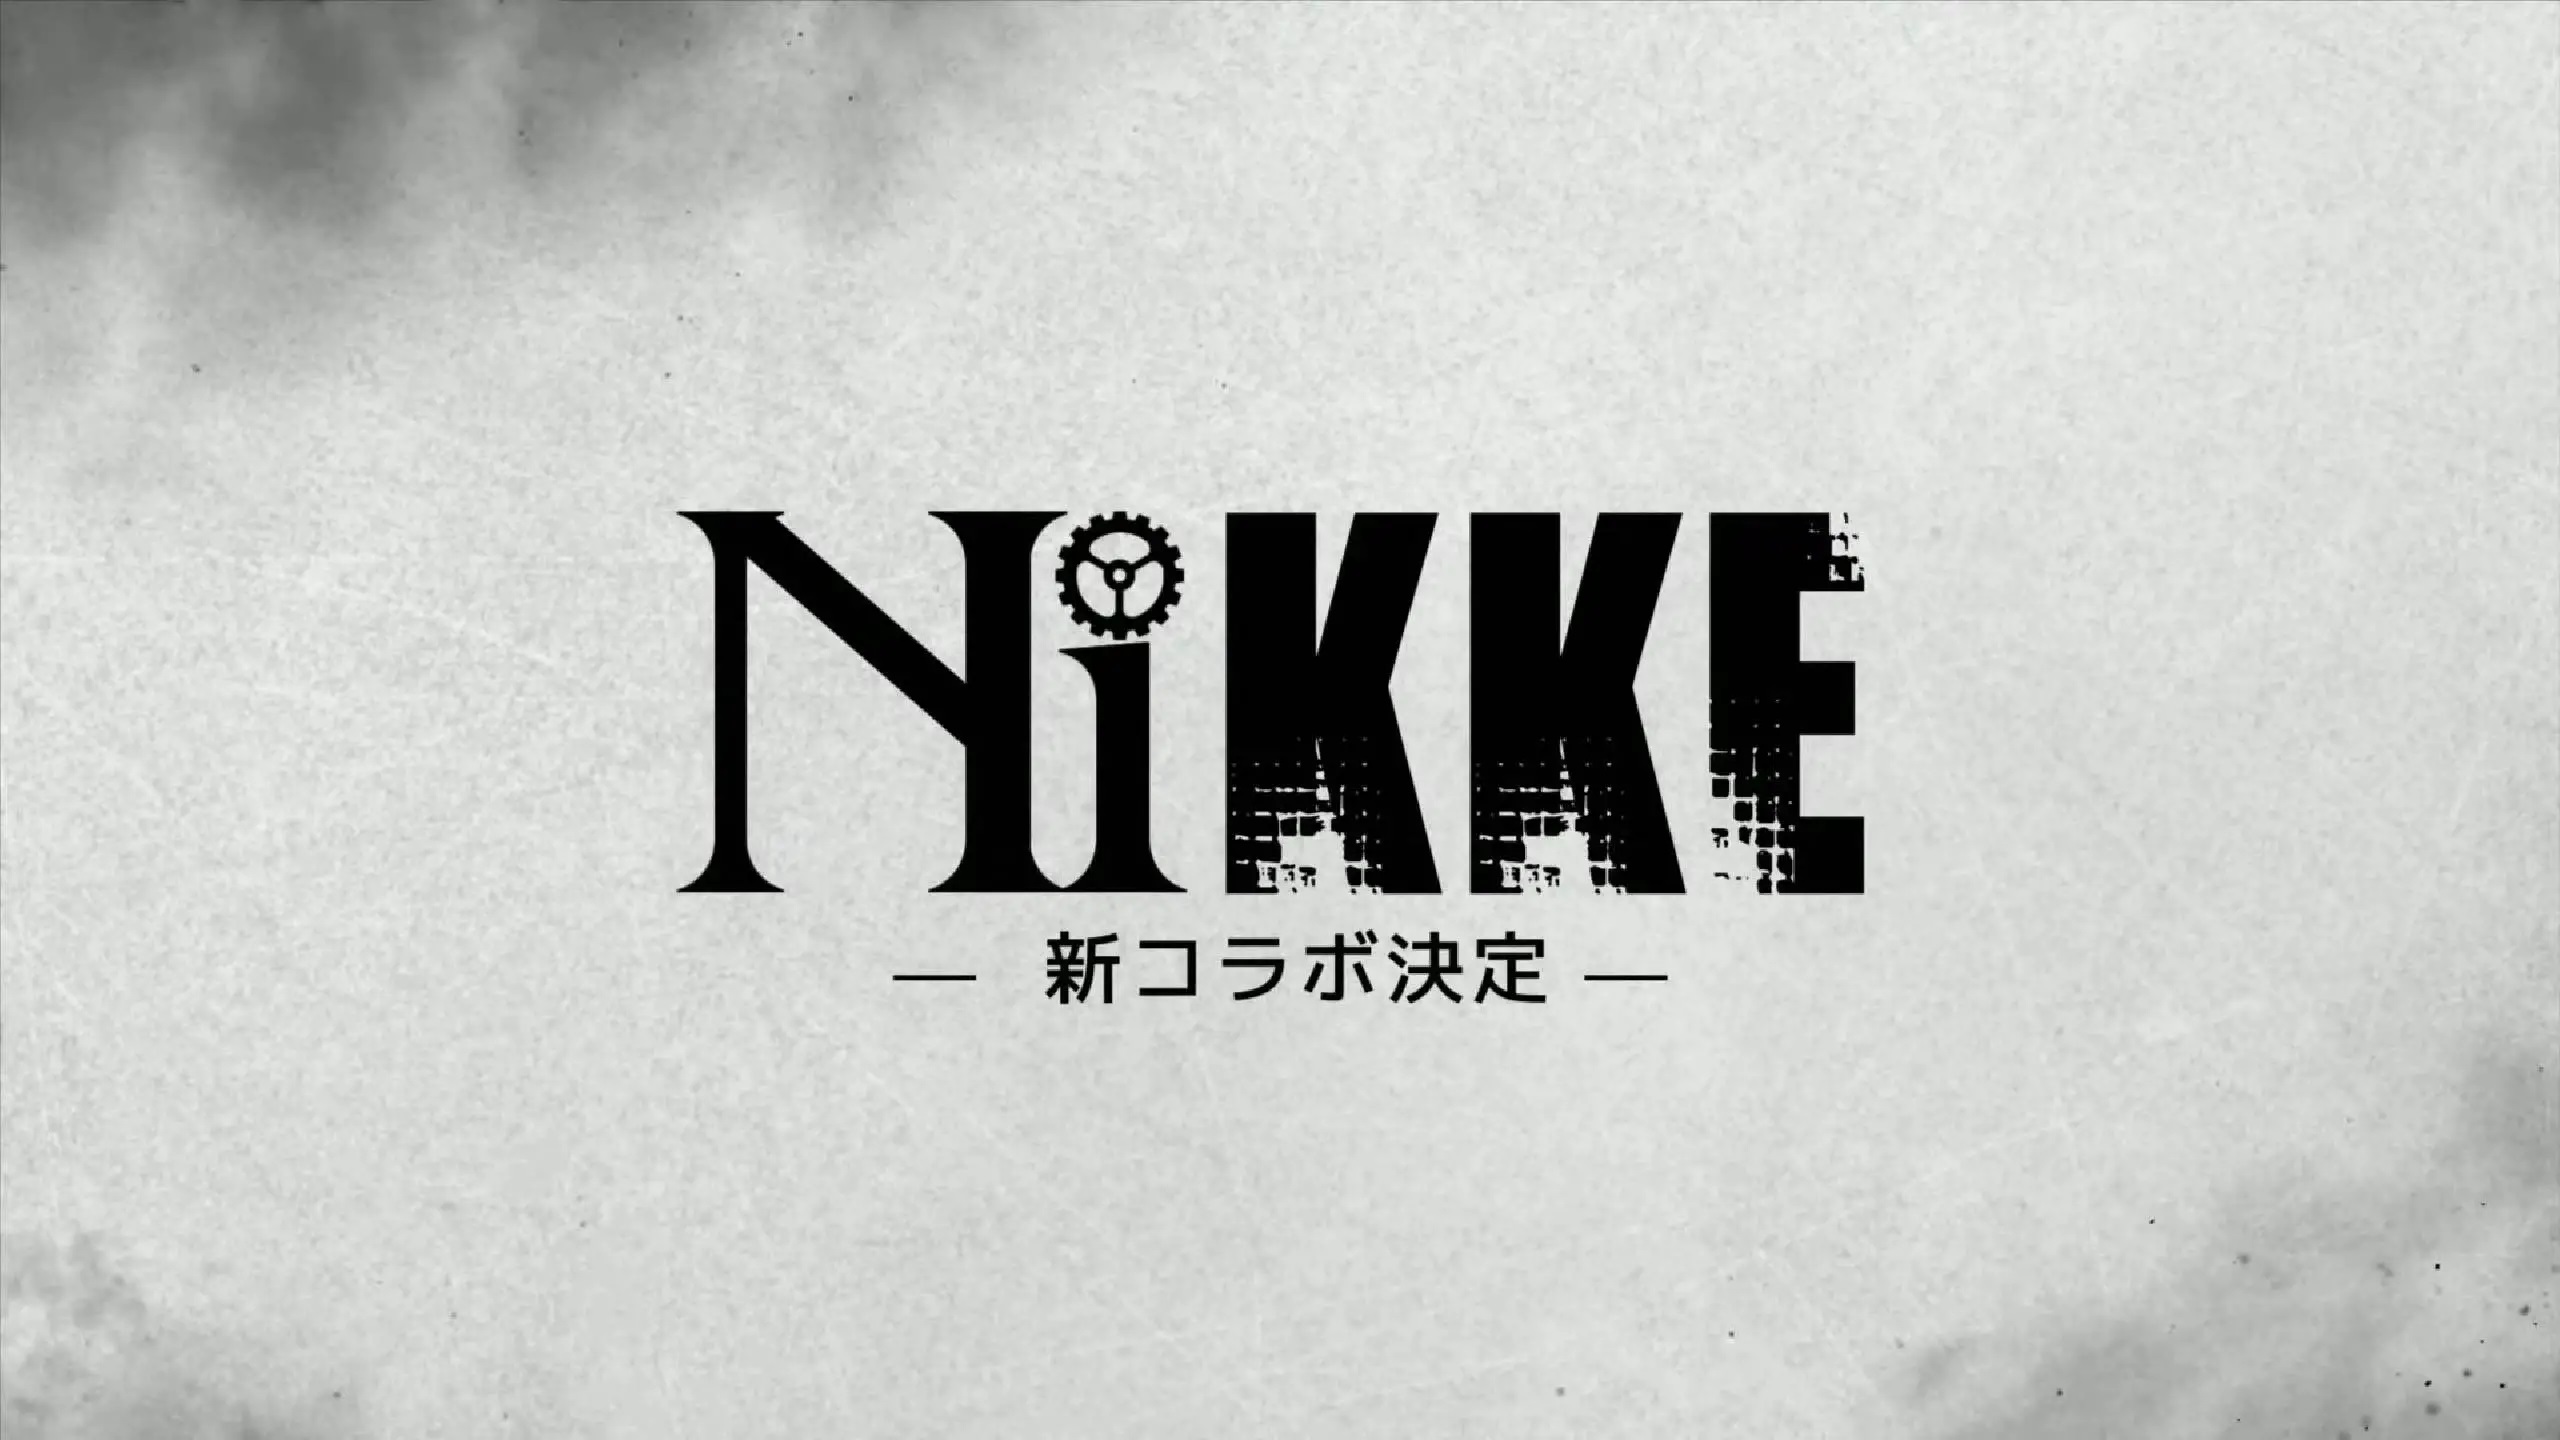 Nikke Goddess Victory NieR Automata